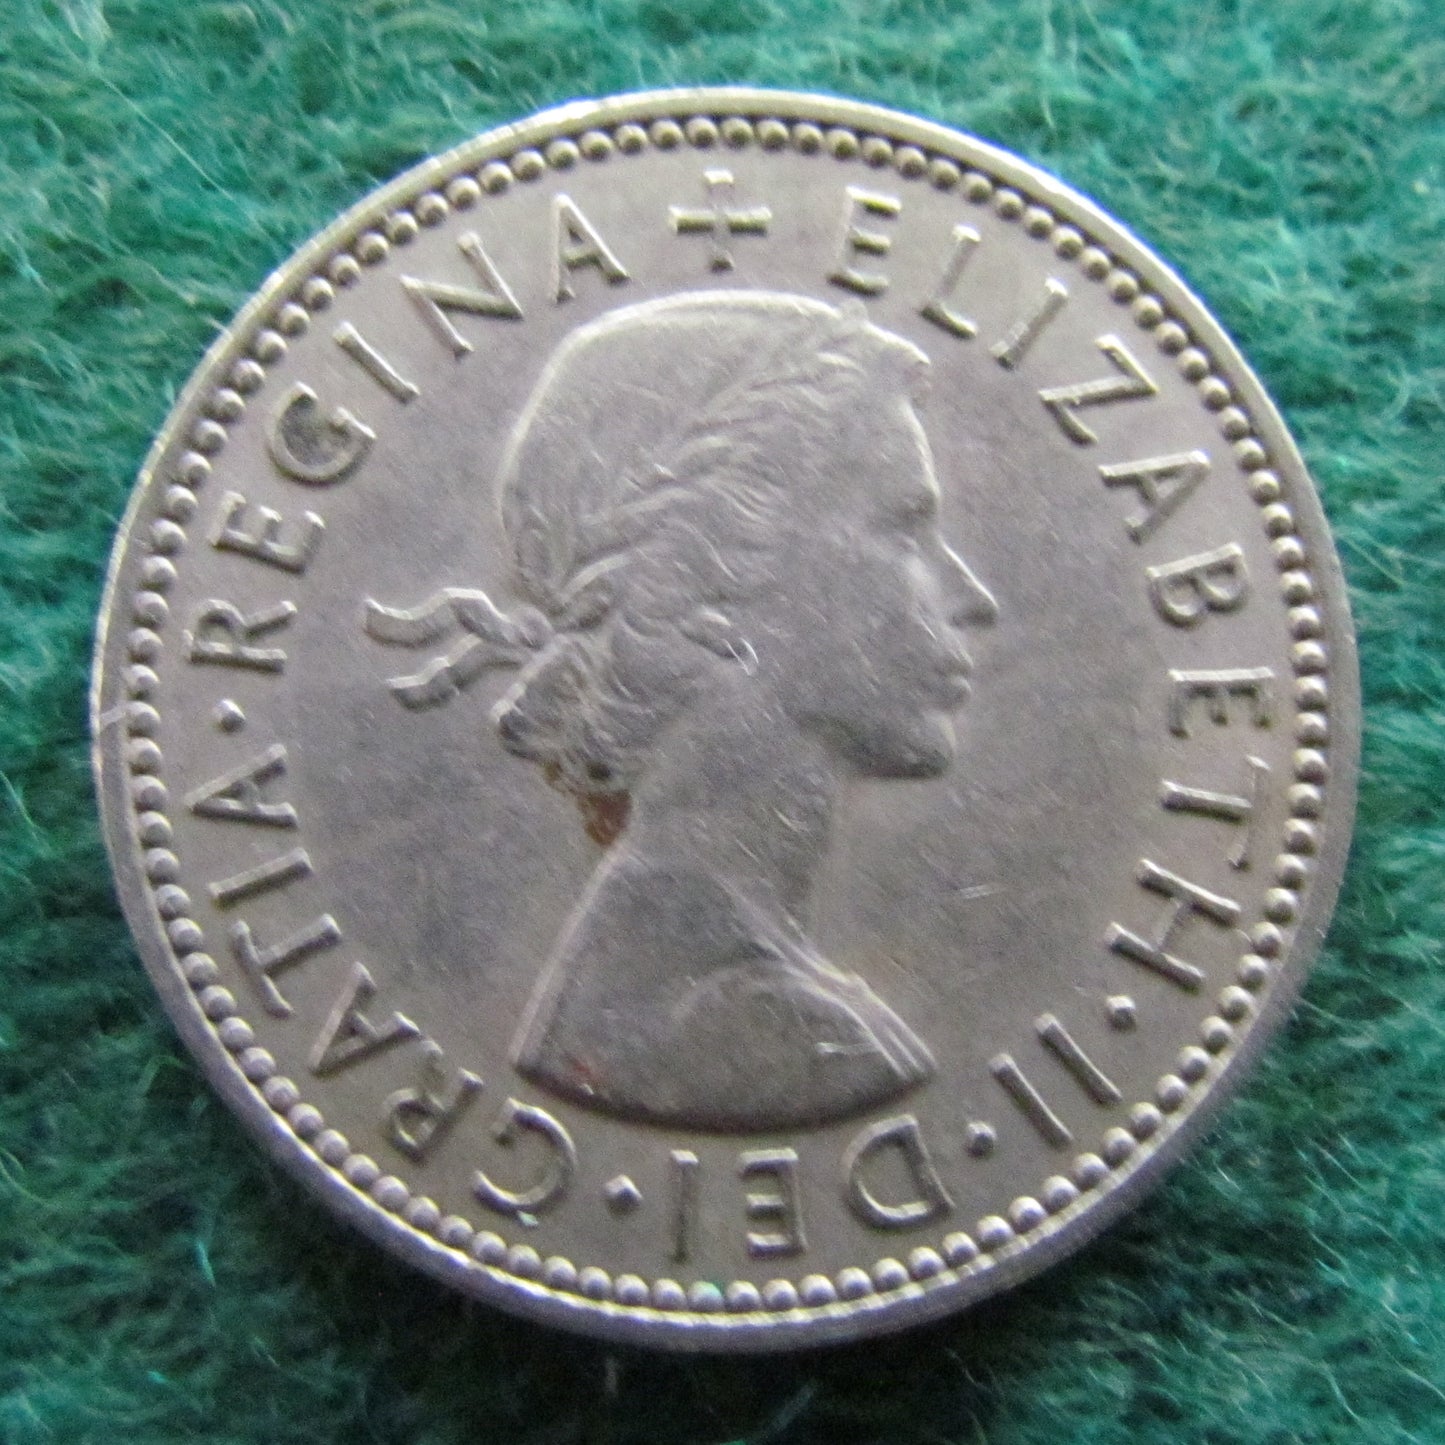 GB British UK English 1954 One Shilling Queen Elizabeth II Coin - Circulated